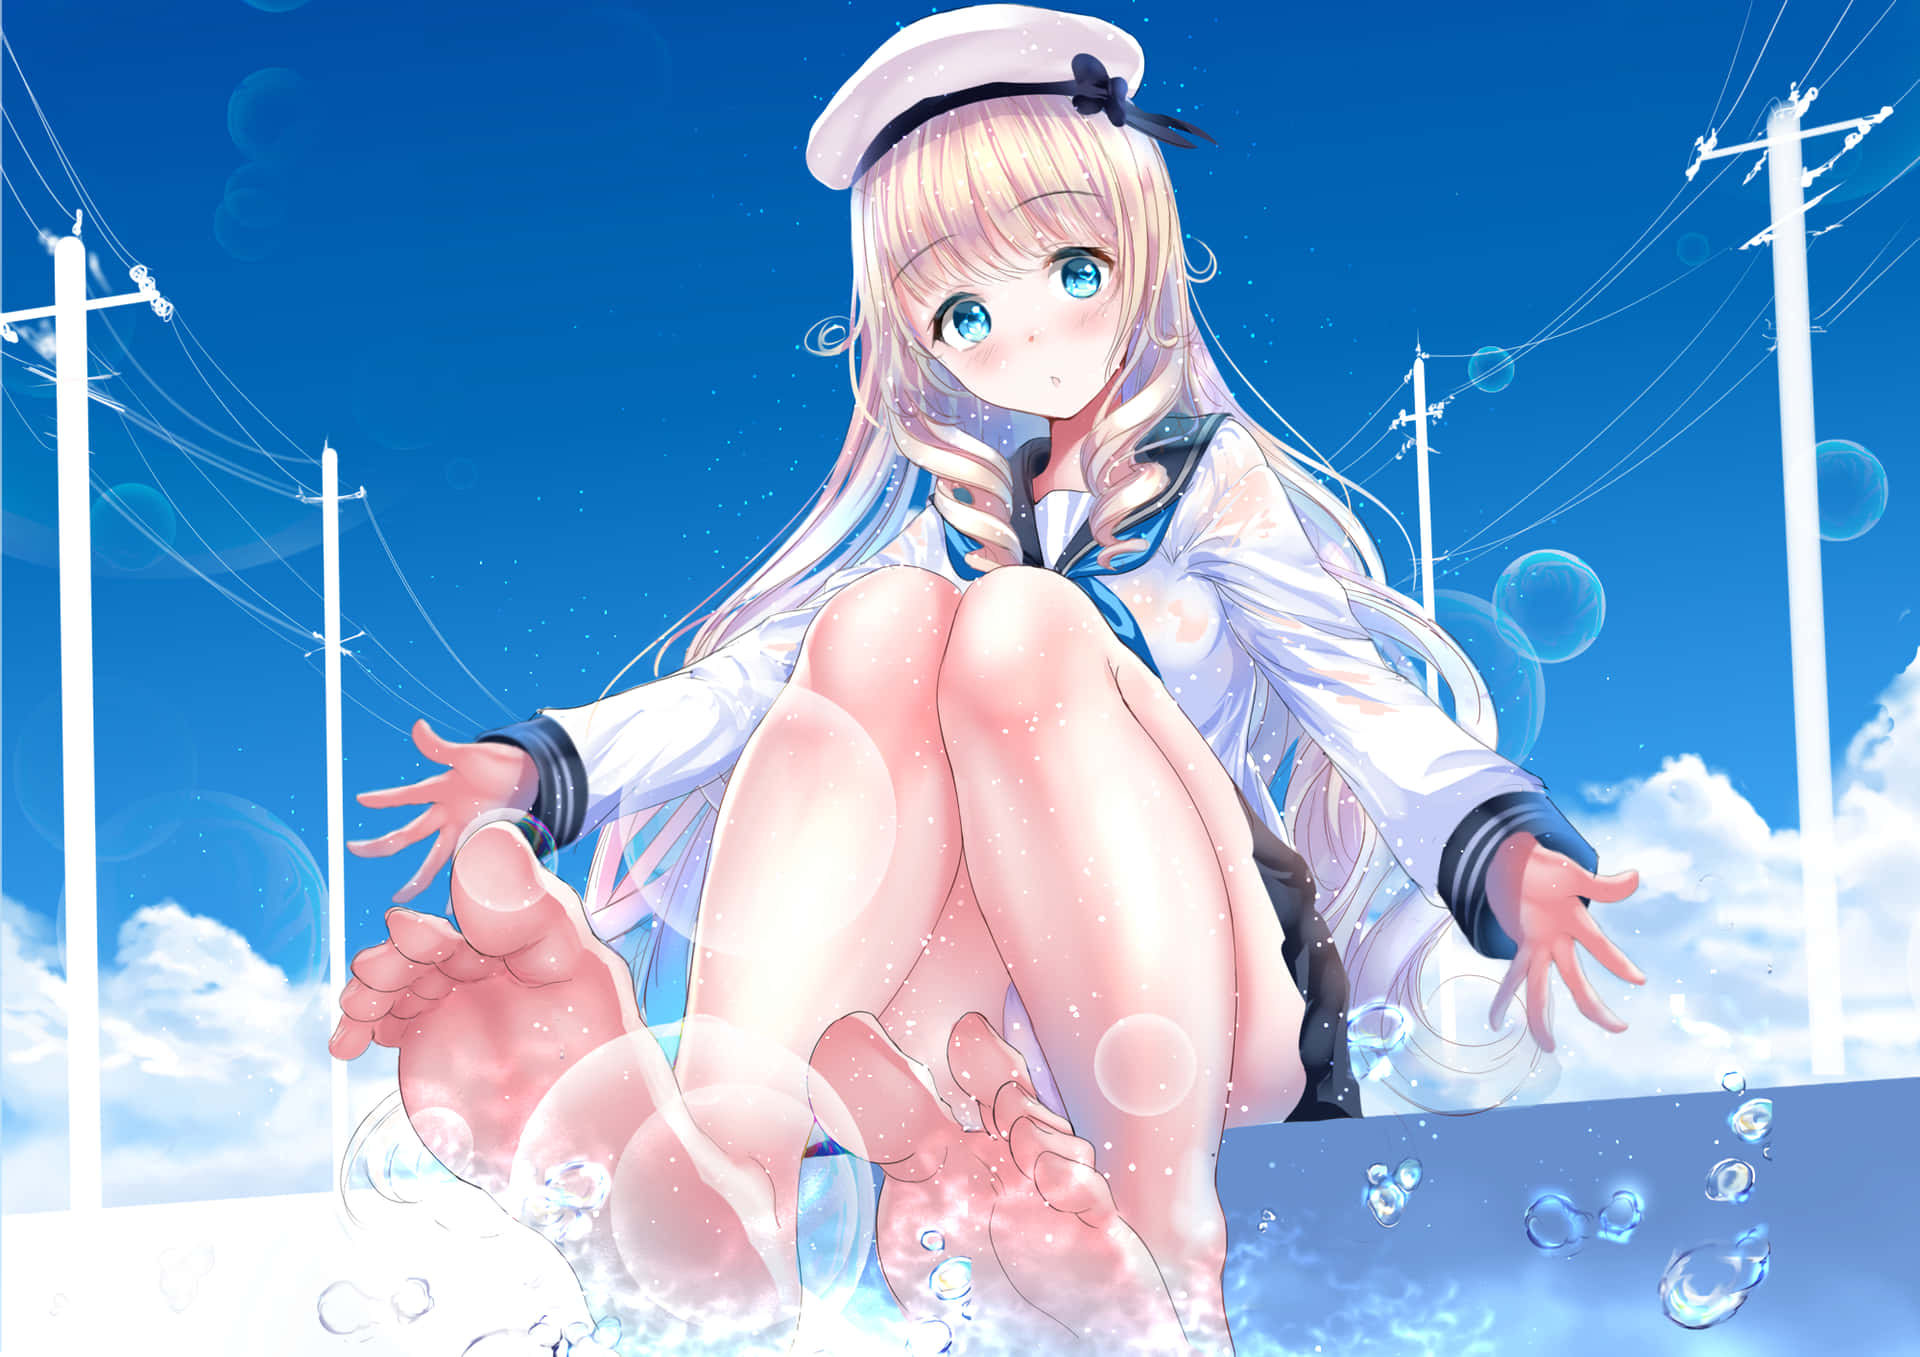 School Uniform Anime Girl Feet On Bubbles Wallpaper